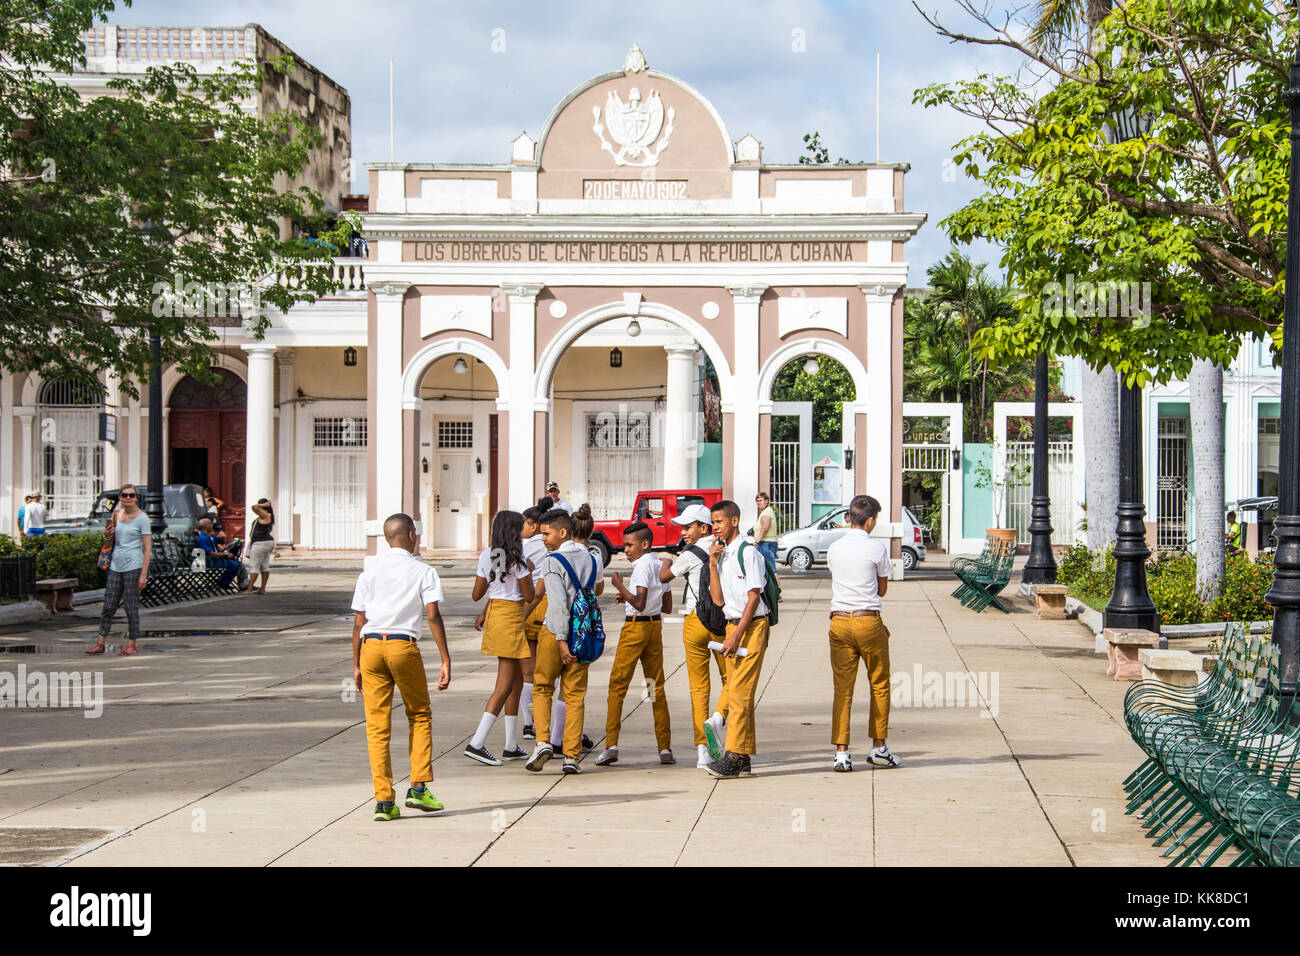 Schule Kinder in Uniformen und Triumphbogen Arco de Triunfo und des Parque José Martí in Cienfuegos, Kuba, Karibik Stockfoto